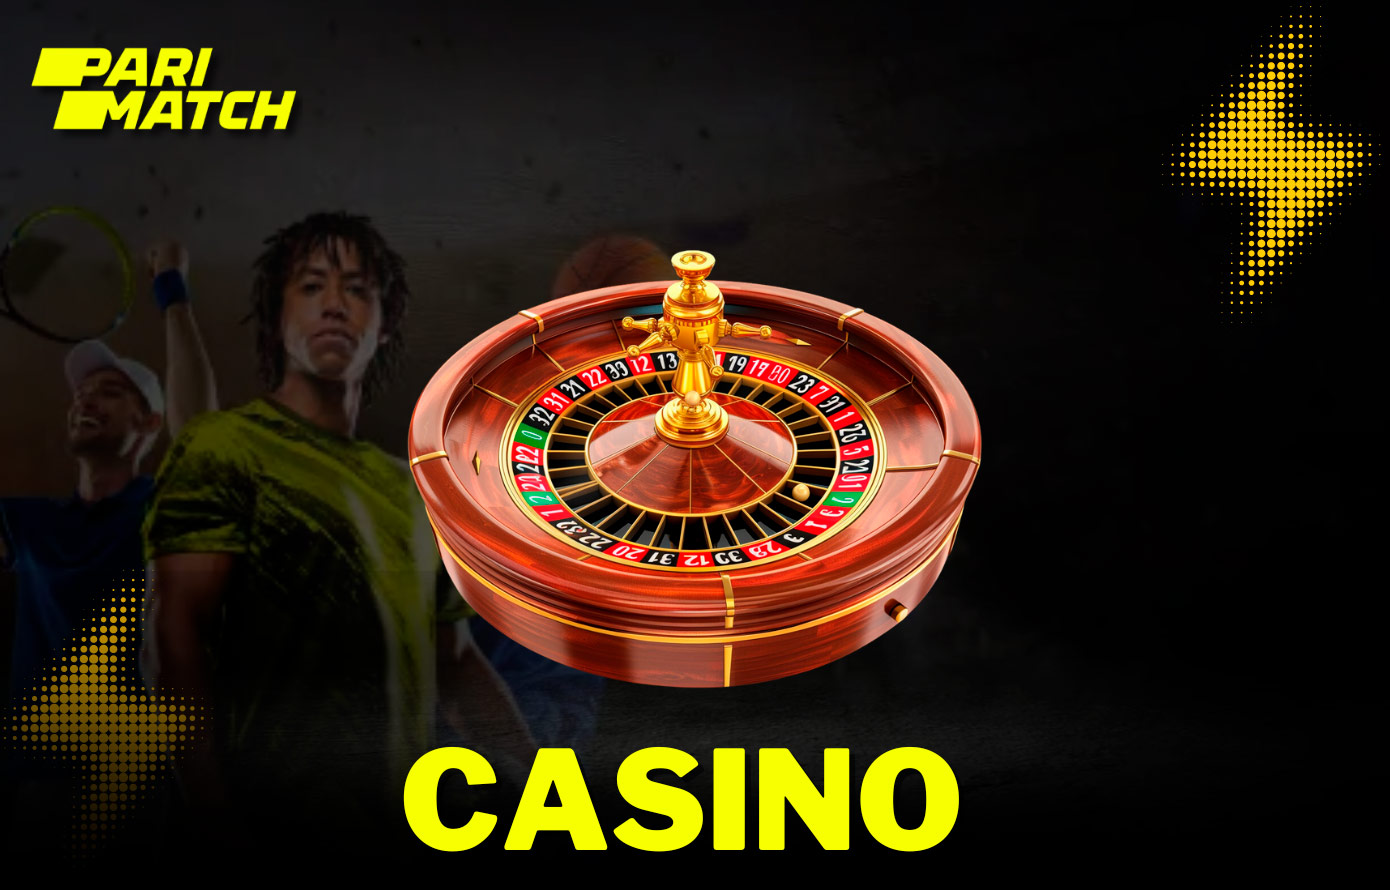 Parimatch offers many casino games